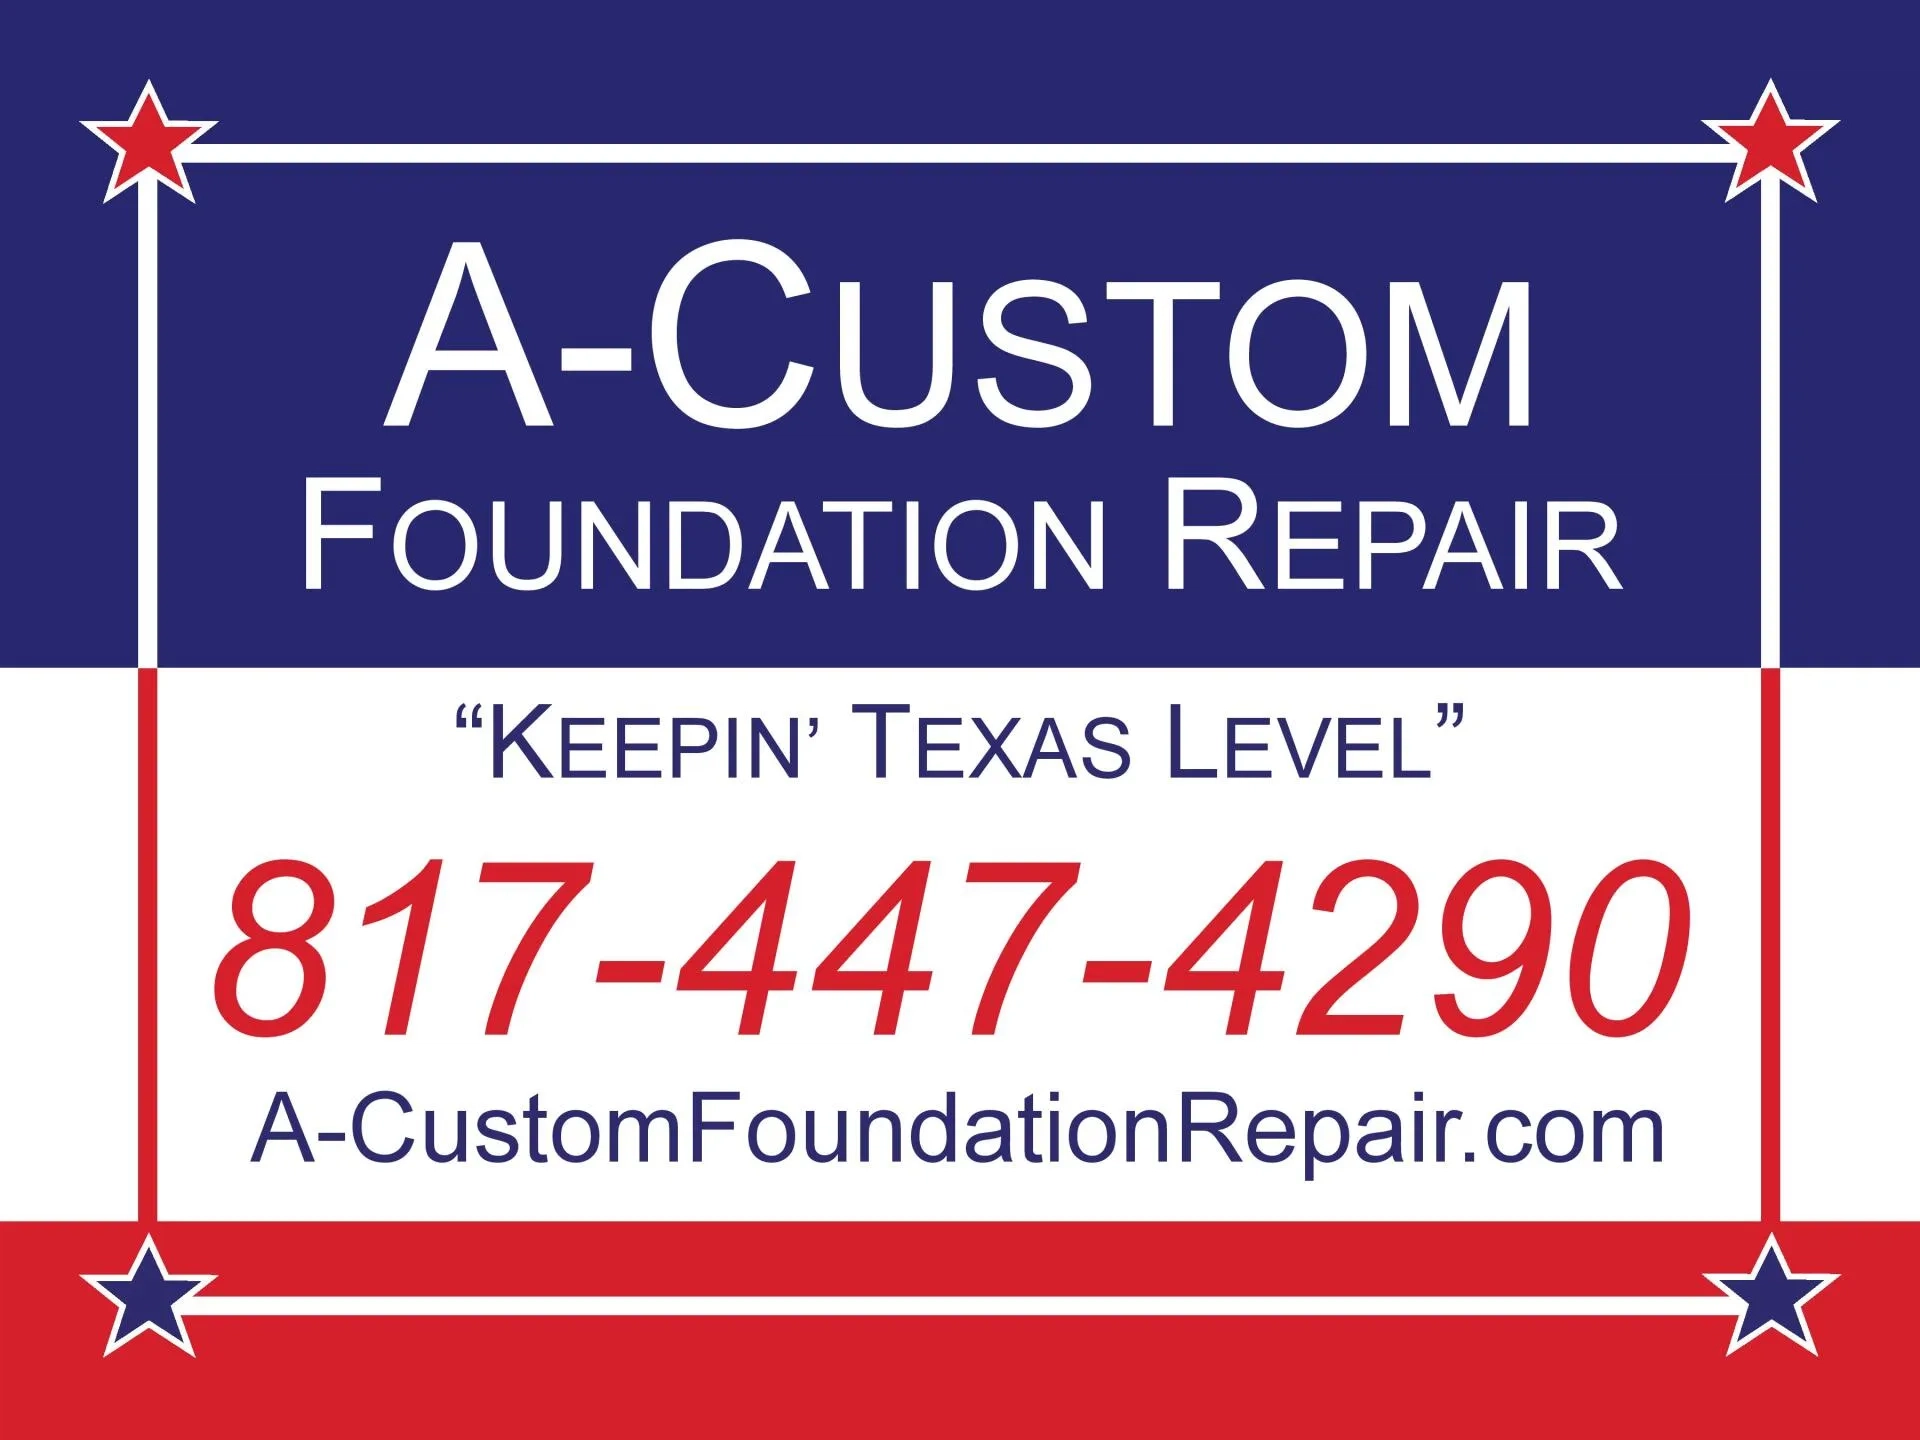 A-Custom Foundation Repair Logo